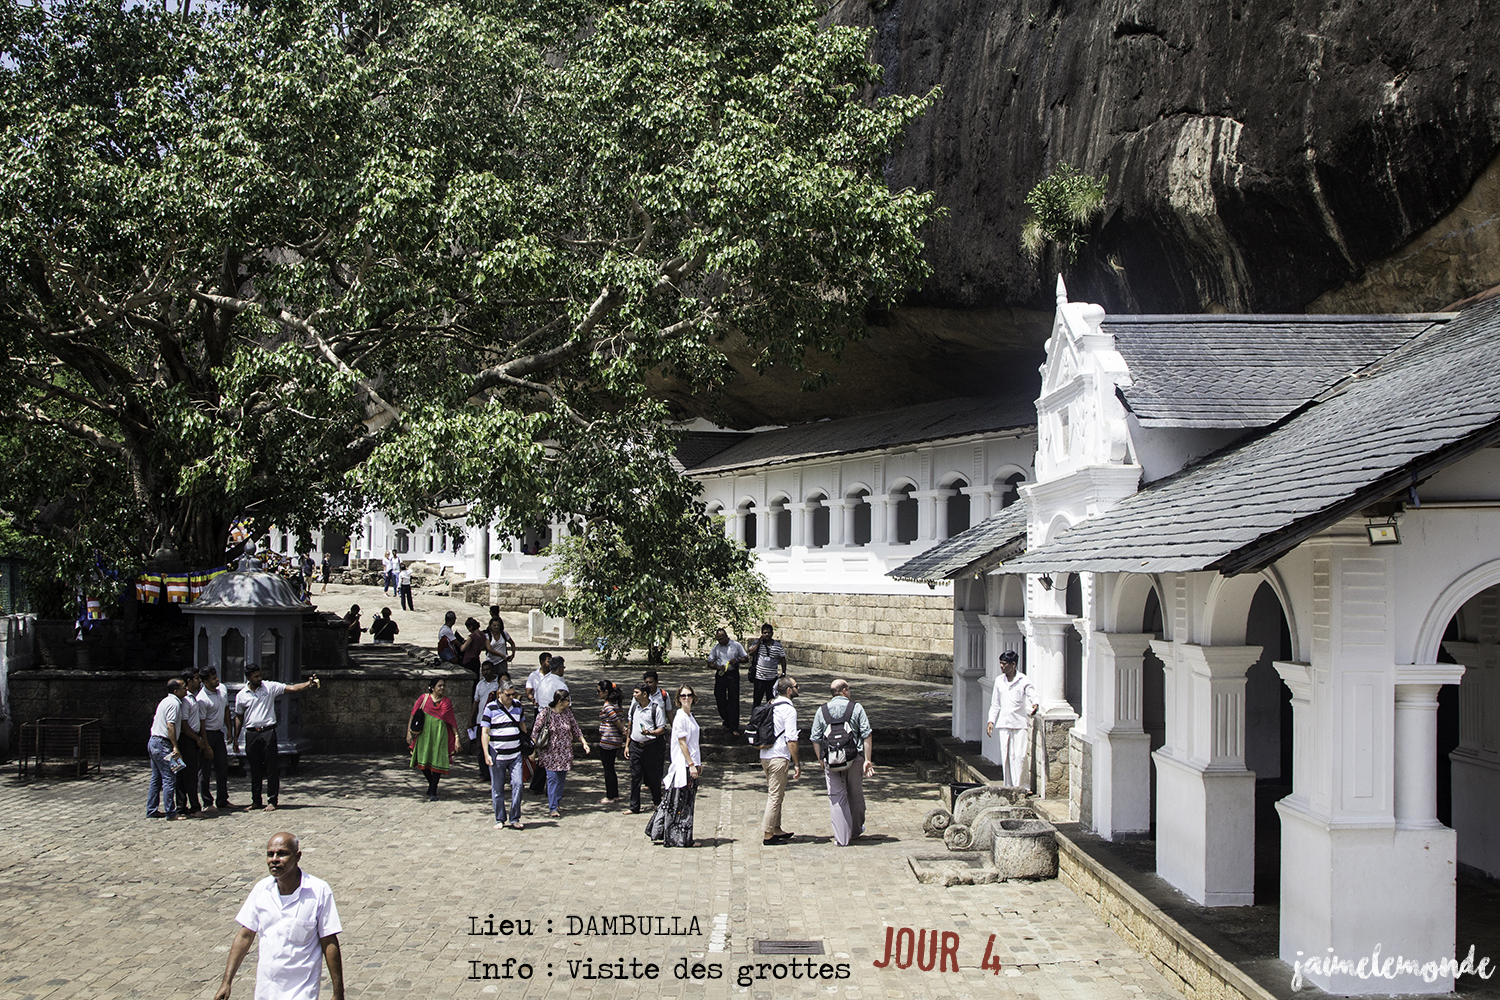 Voyage Sri Lanka - Itinéraire Jour 4 - 1 Dambulla - Visite des grottes - ©jaimelemonde